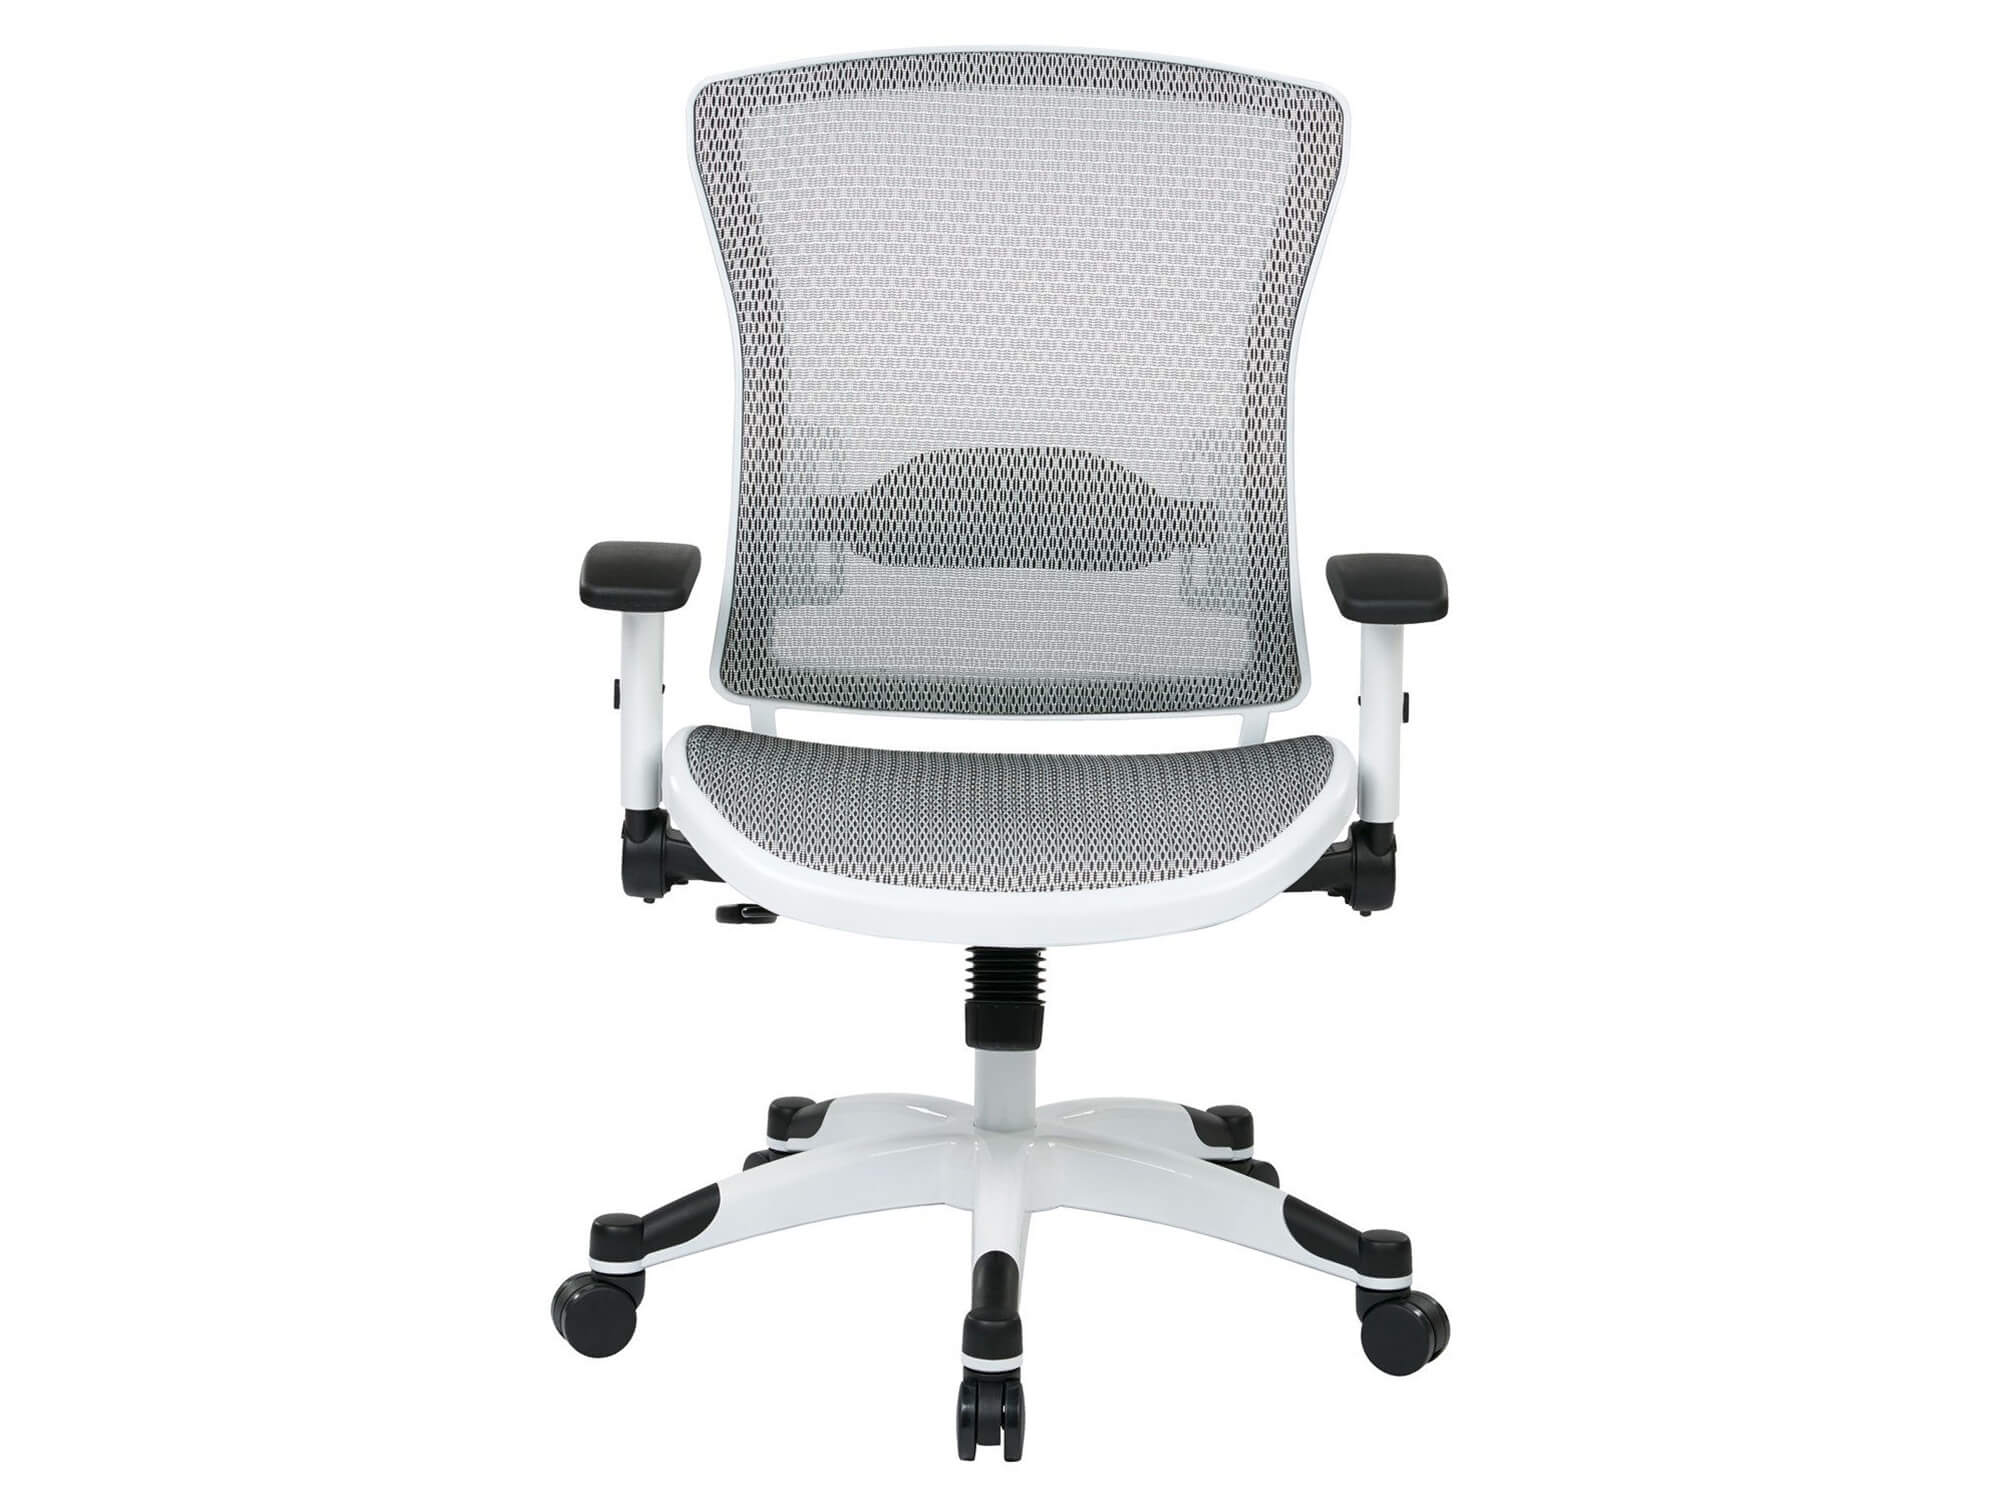 Ergonomic chair front